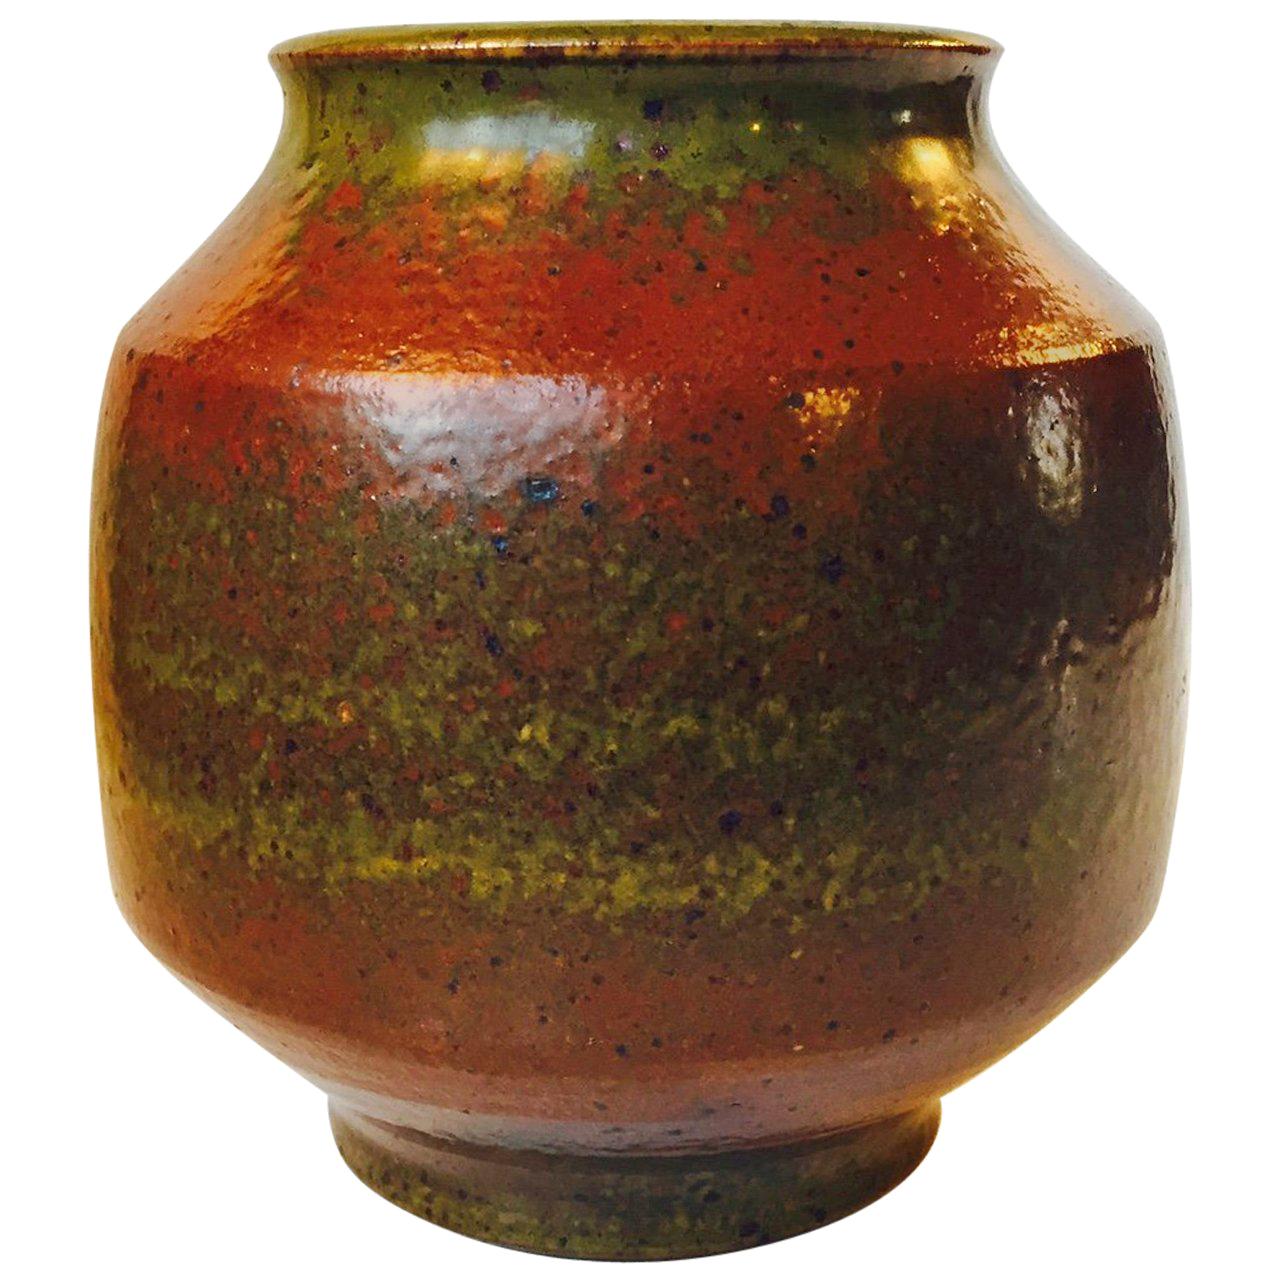 Glazed Stoneware Vase by Female Danish Ceramist Marianne Starck for M. Andersen